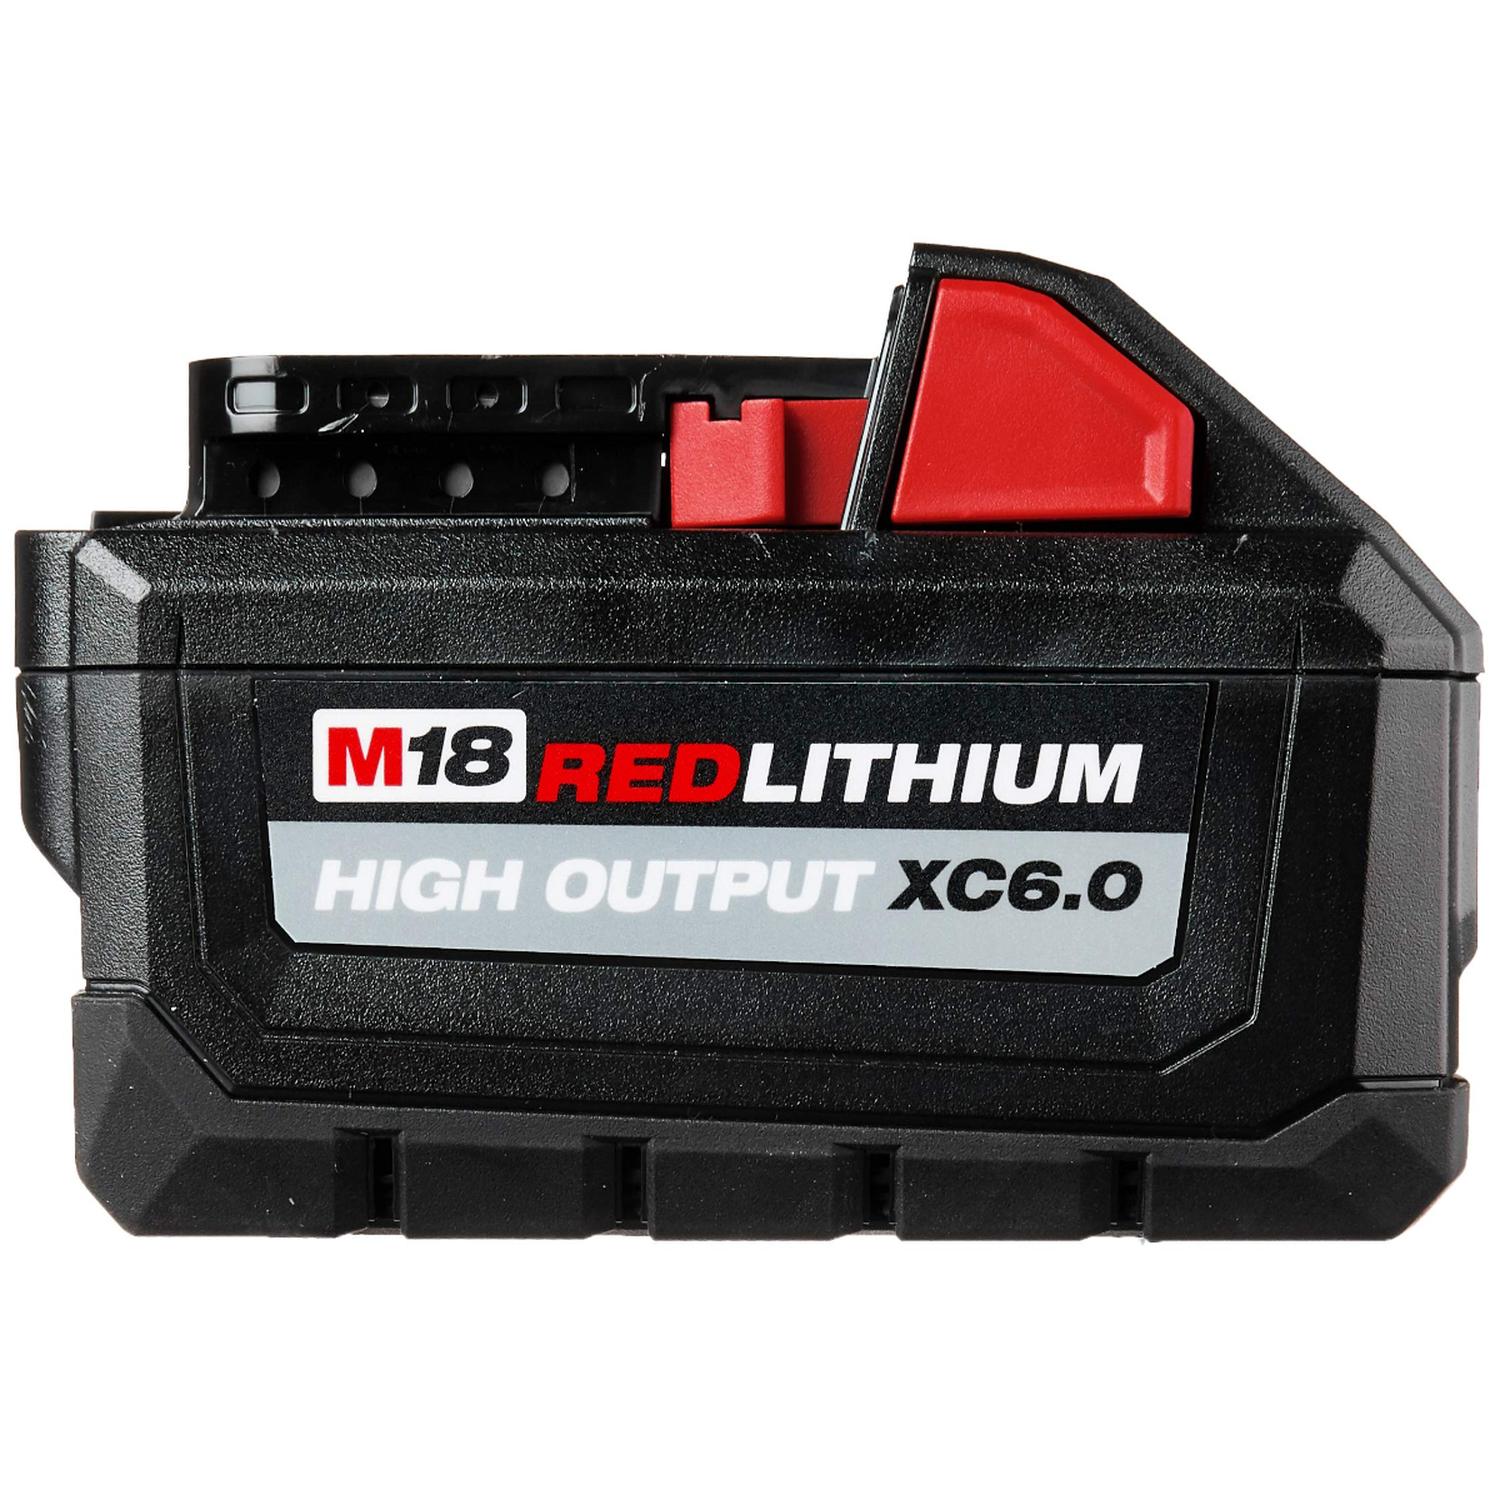 Bateria redlithium m18 gran potencia hd 6.0 amp MILWAUKEE en Pachuca